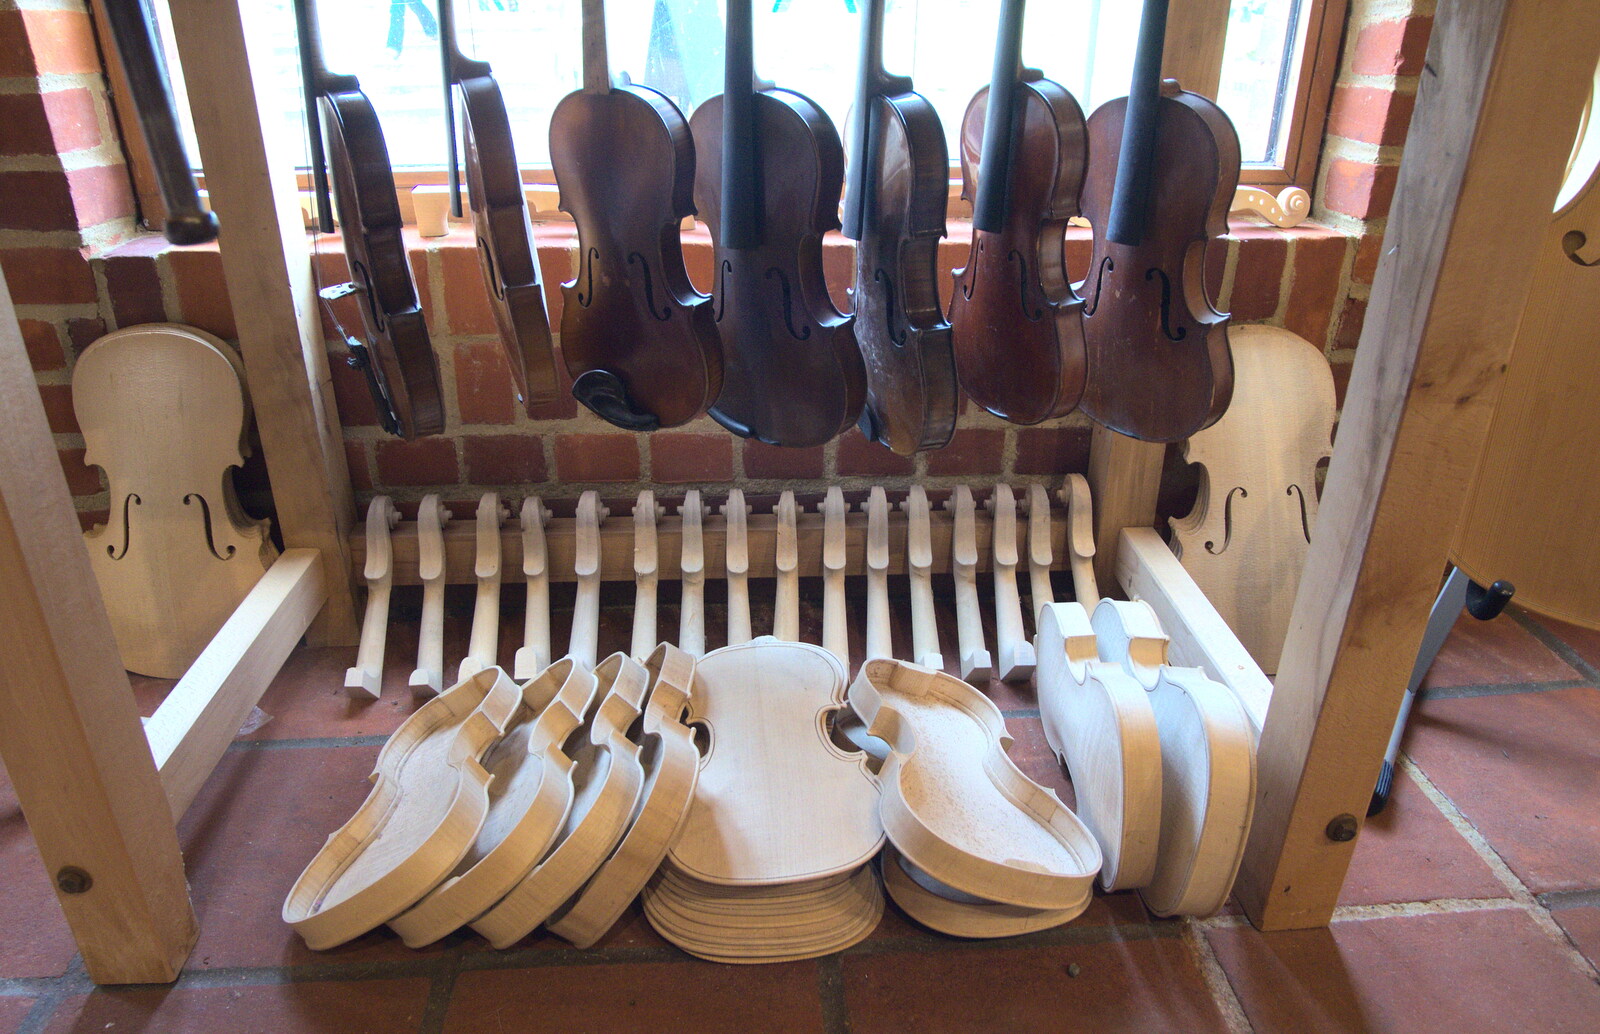 A stack of part-finished violins from The Aldeburgh Food Festival, Aldeburgh, Suffolk - 30th September 2012